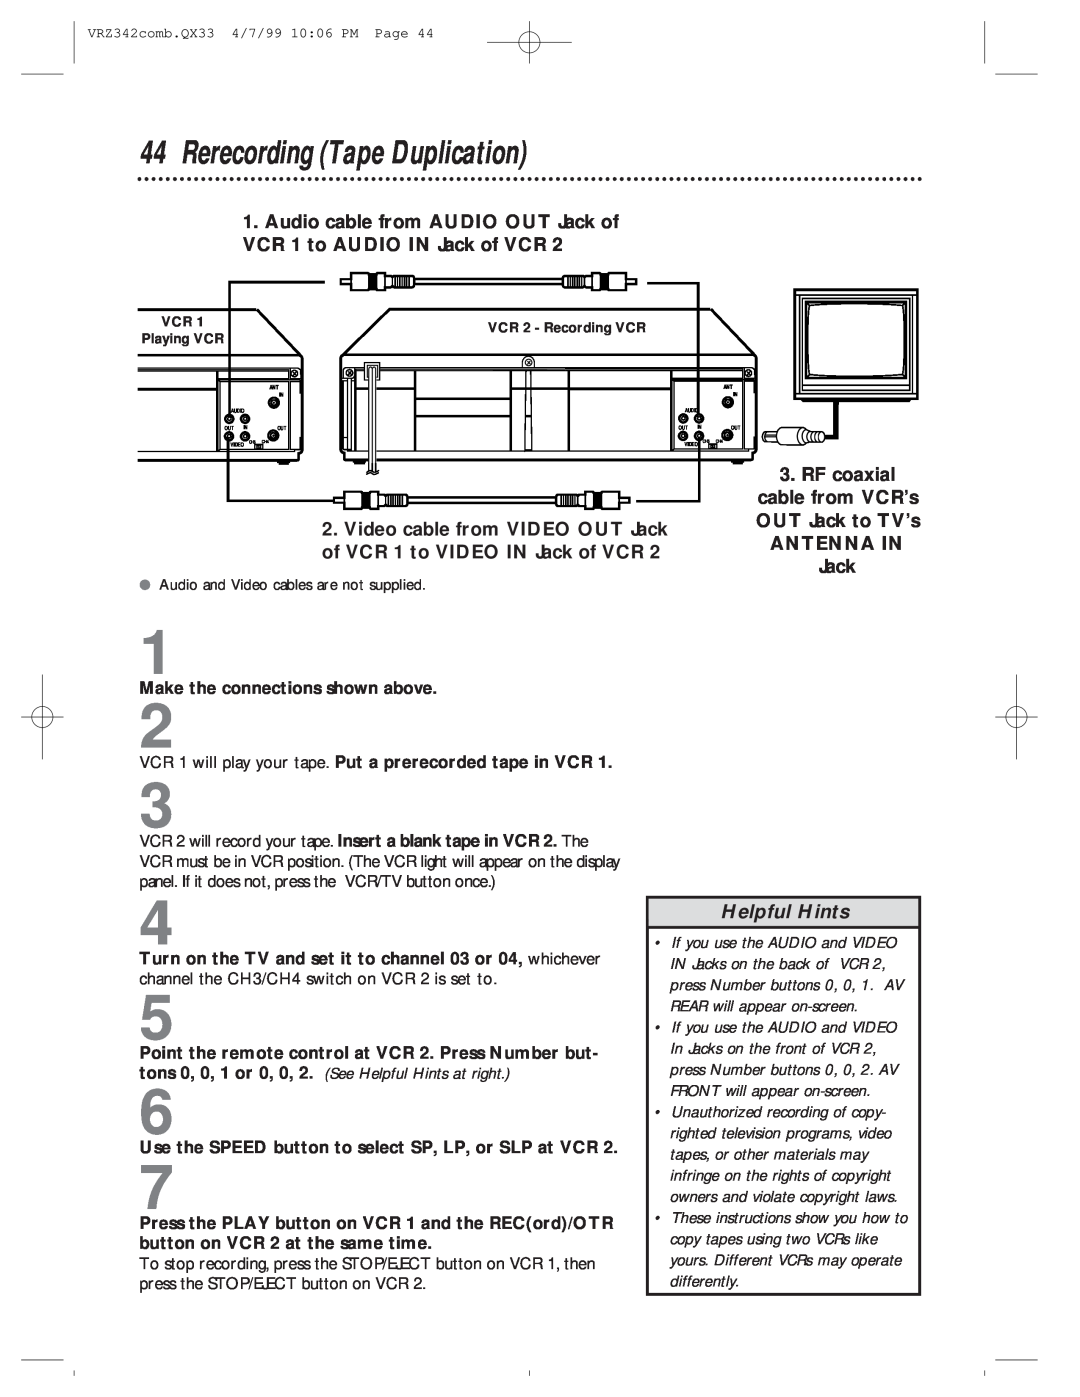 Magnavox VRZ342AT99 owner manual Rerecording Tape Duplication, Helpful Hints, VCR 2 - Recording VCR 